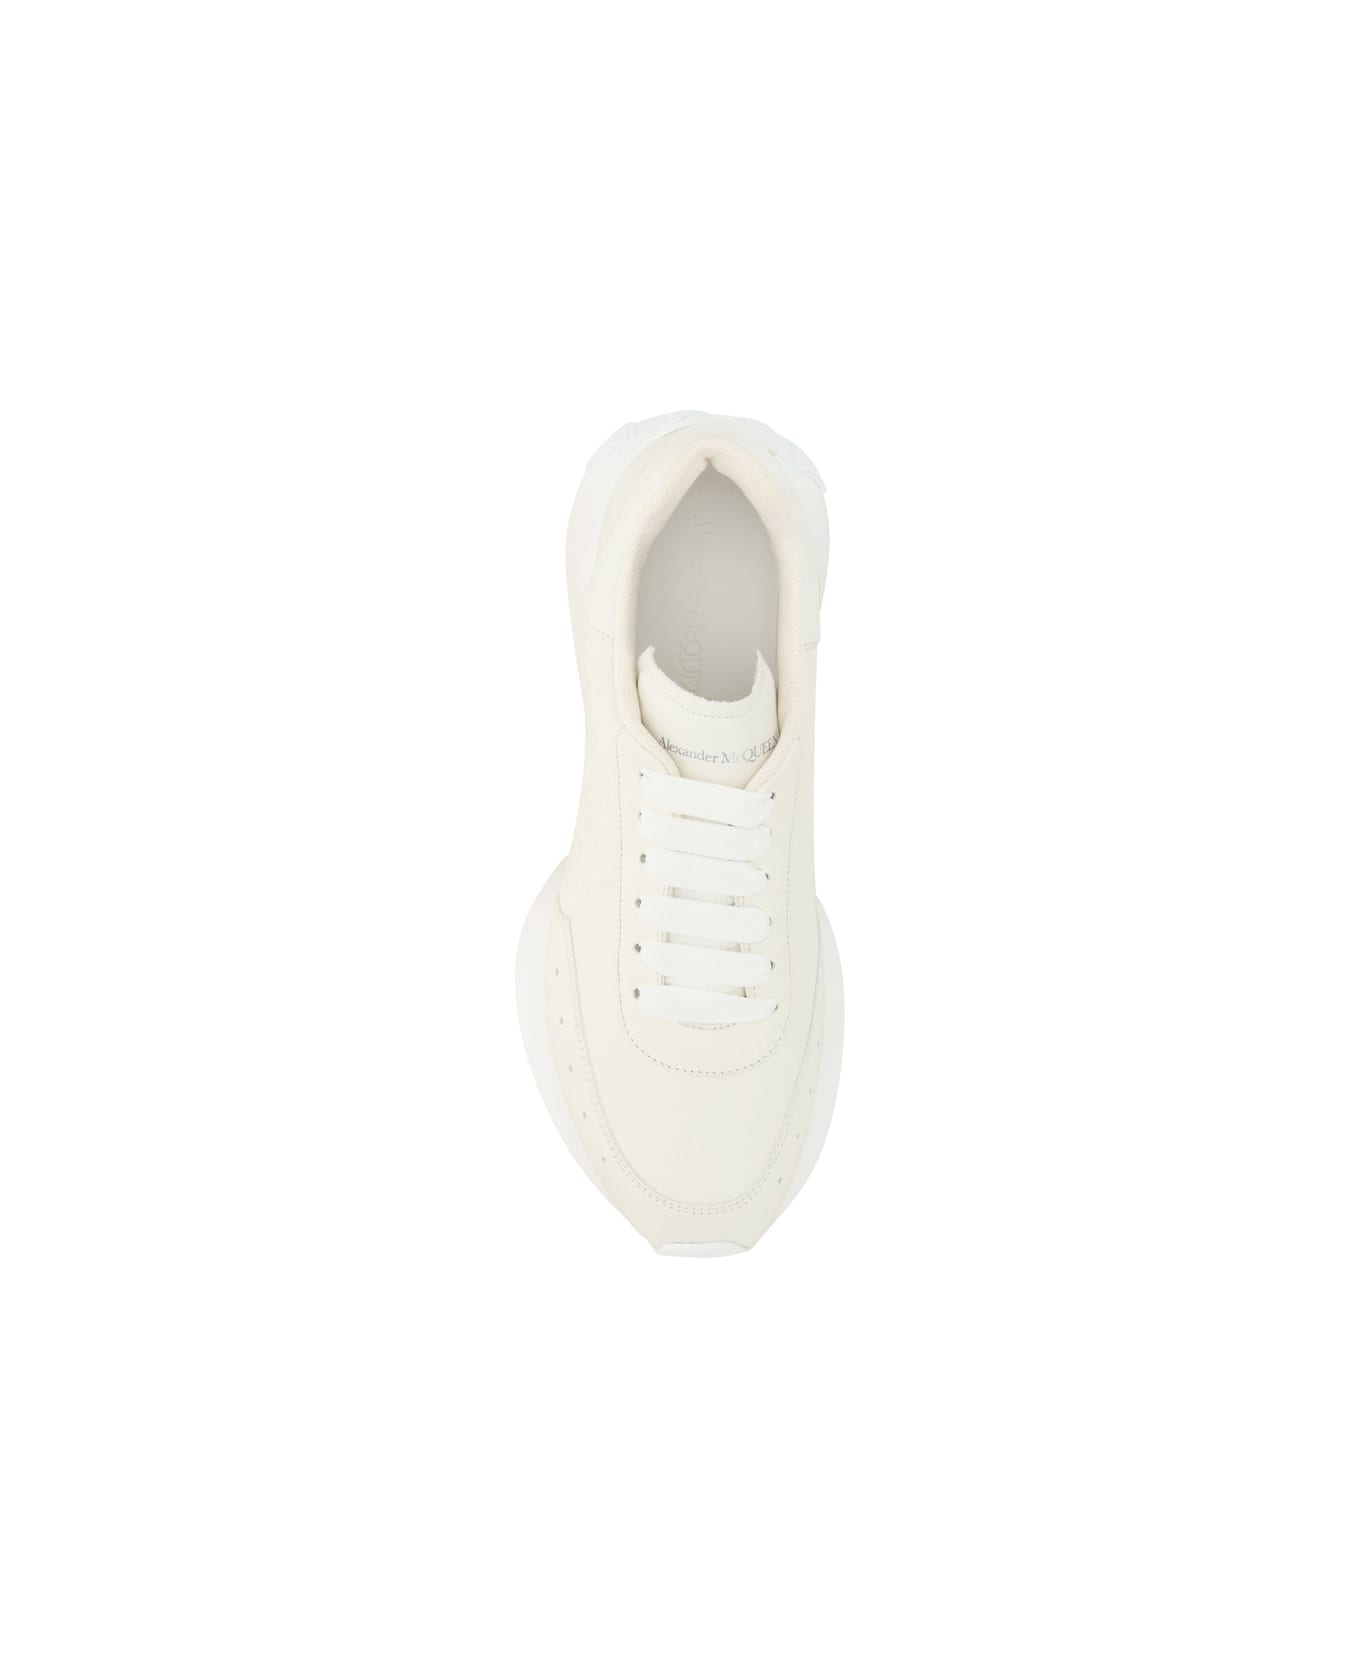 Alexander McQueen Sprint Runner Leather Sneakers - White/white